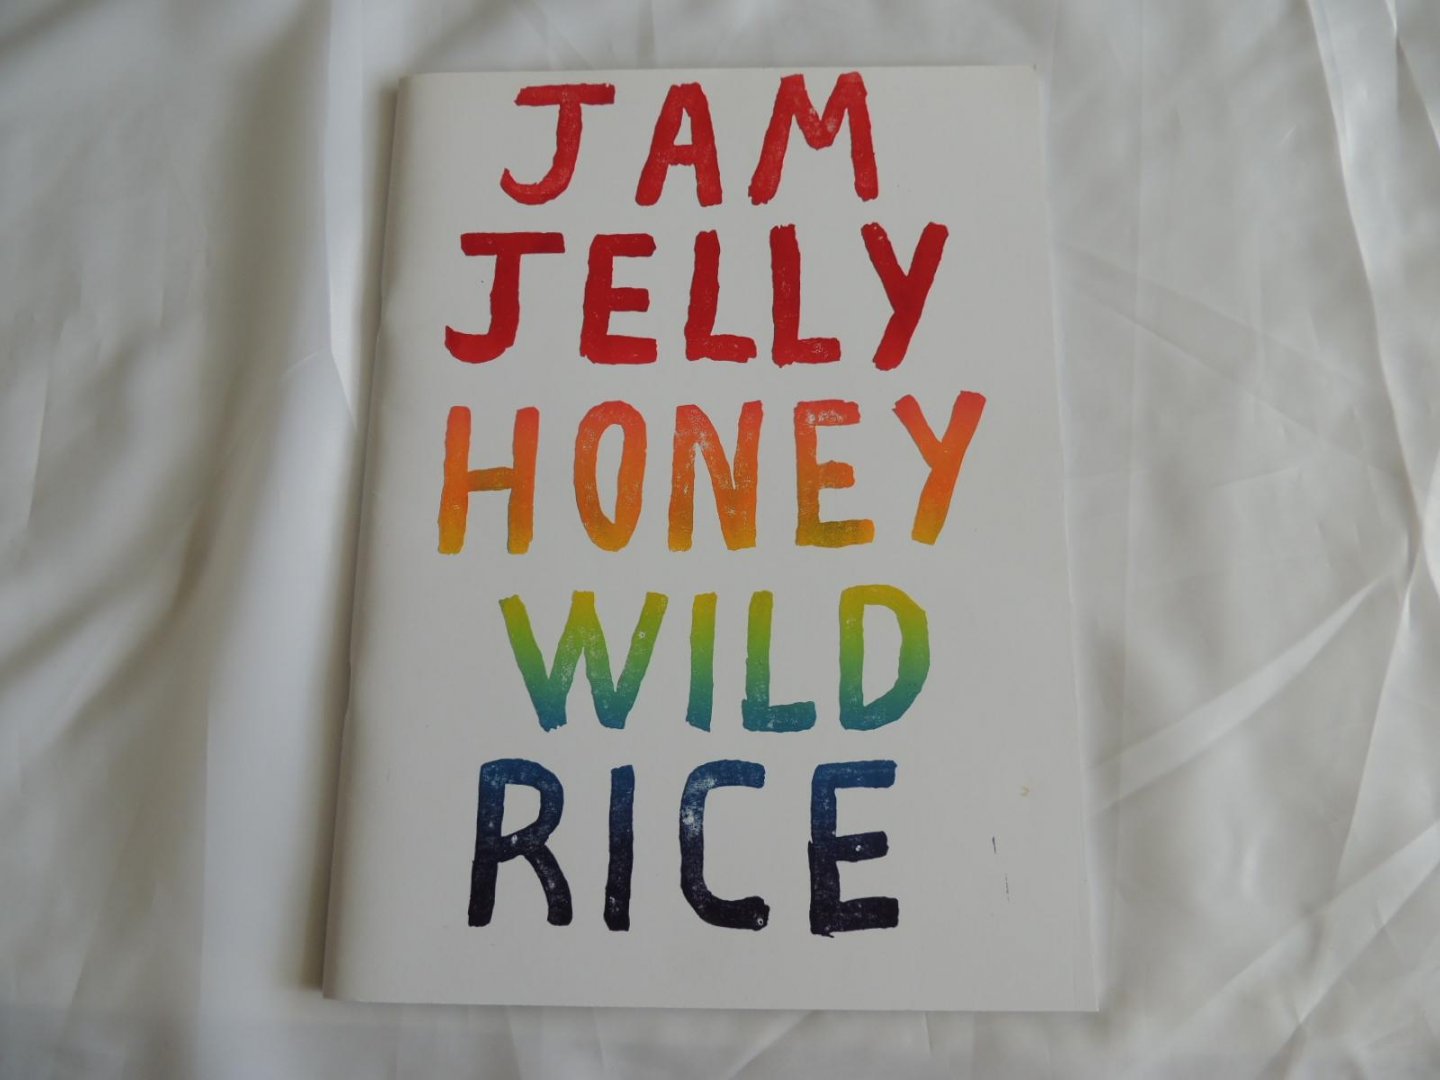 Coley Brown - Jam Jelly Honey Wild Rice  - I am Jelly Honey Wild Rice